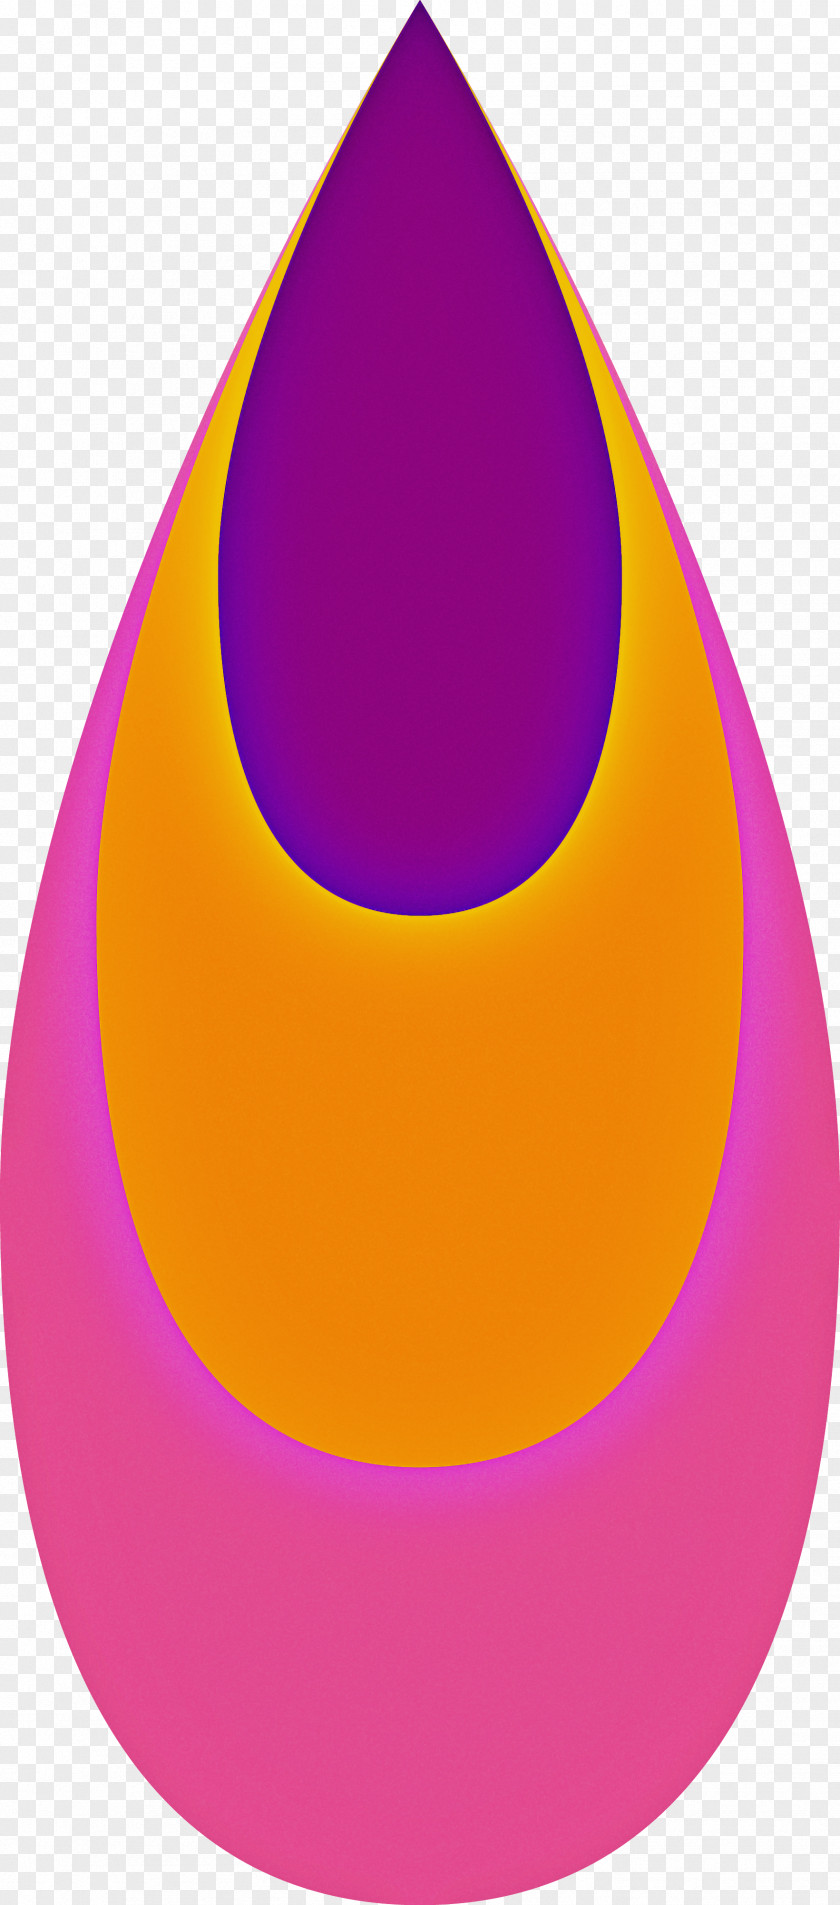 Purple PNG